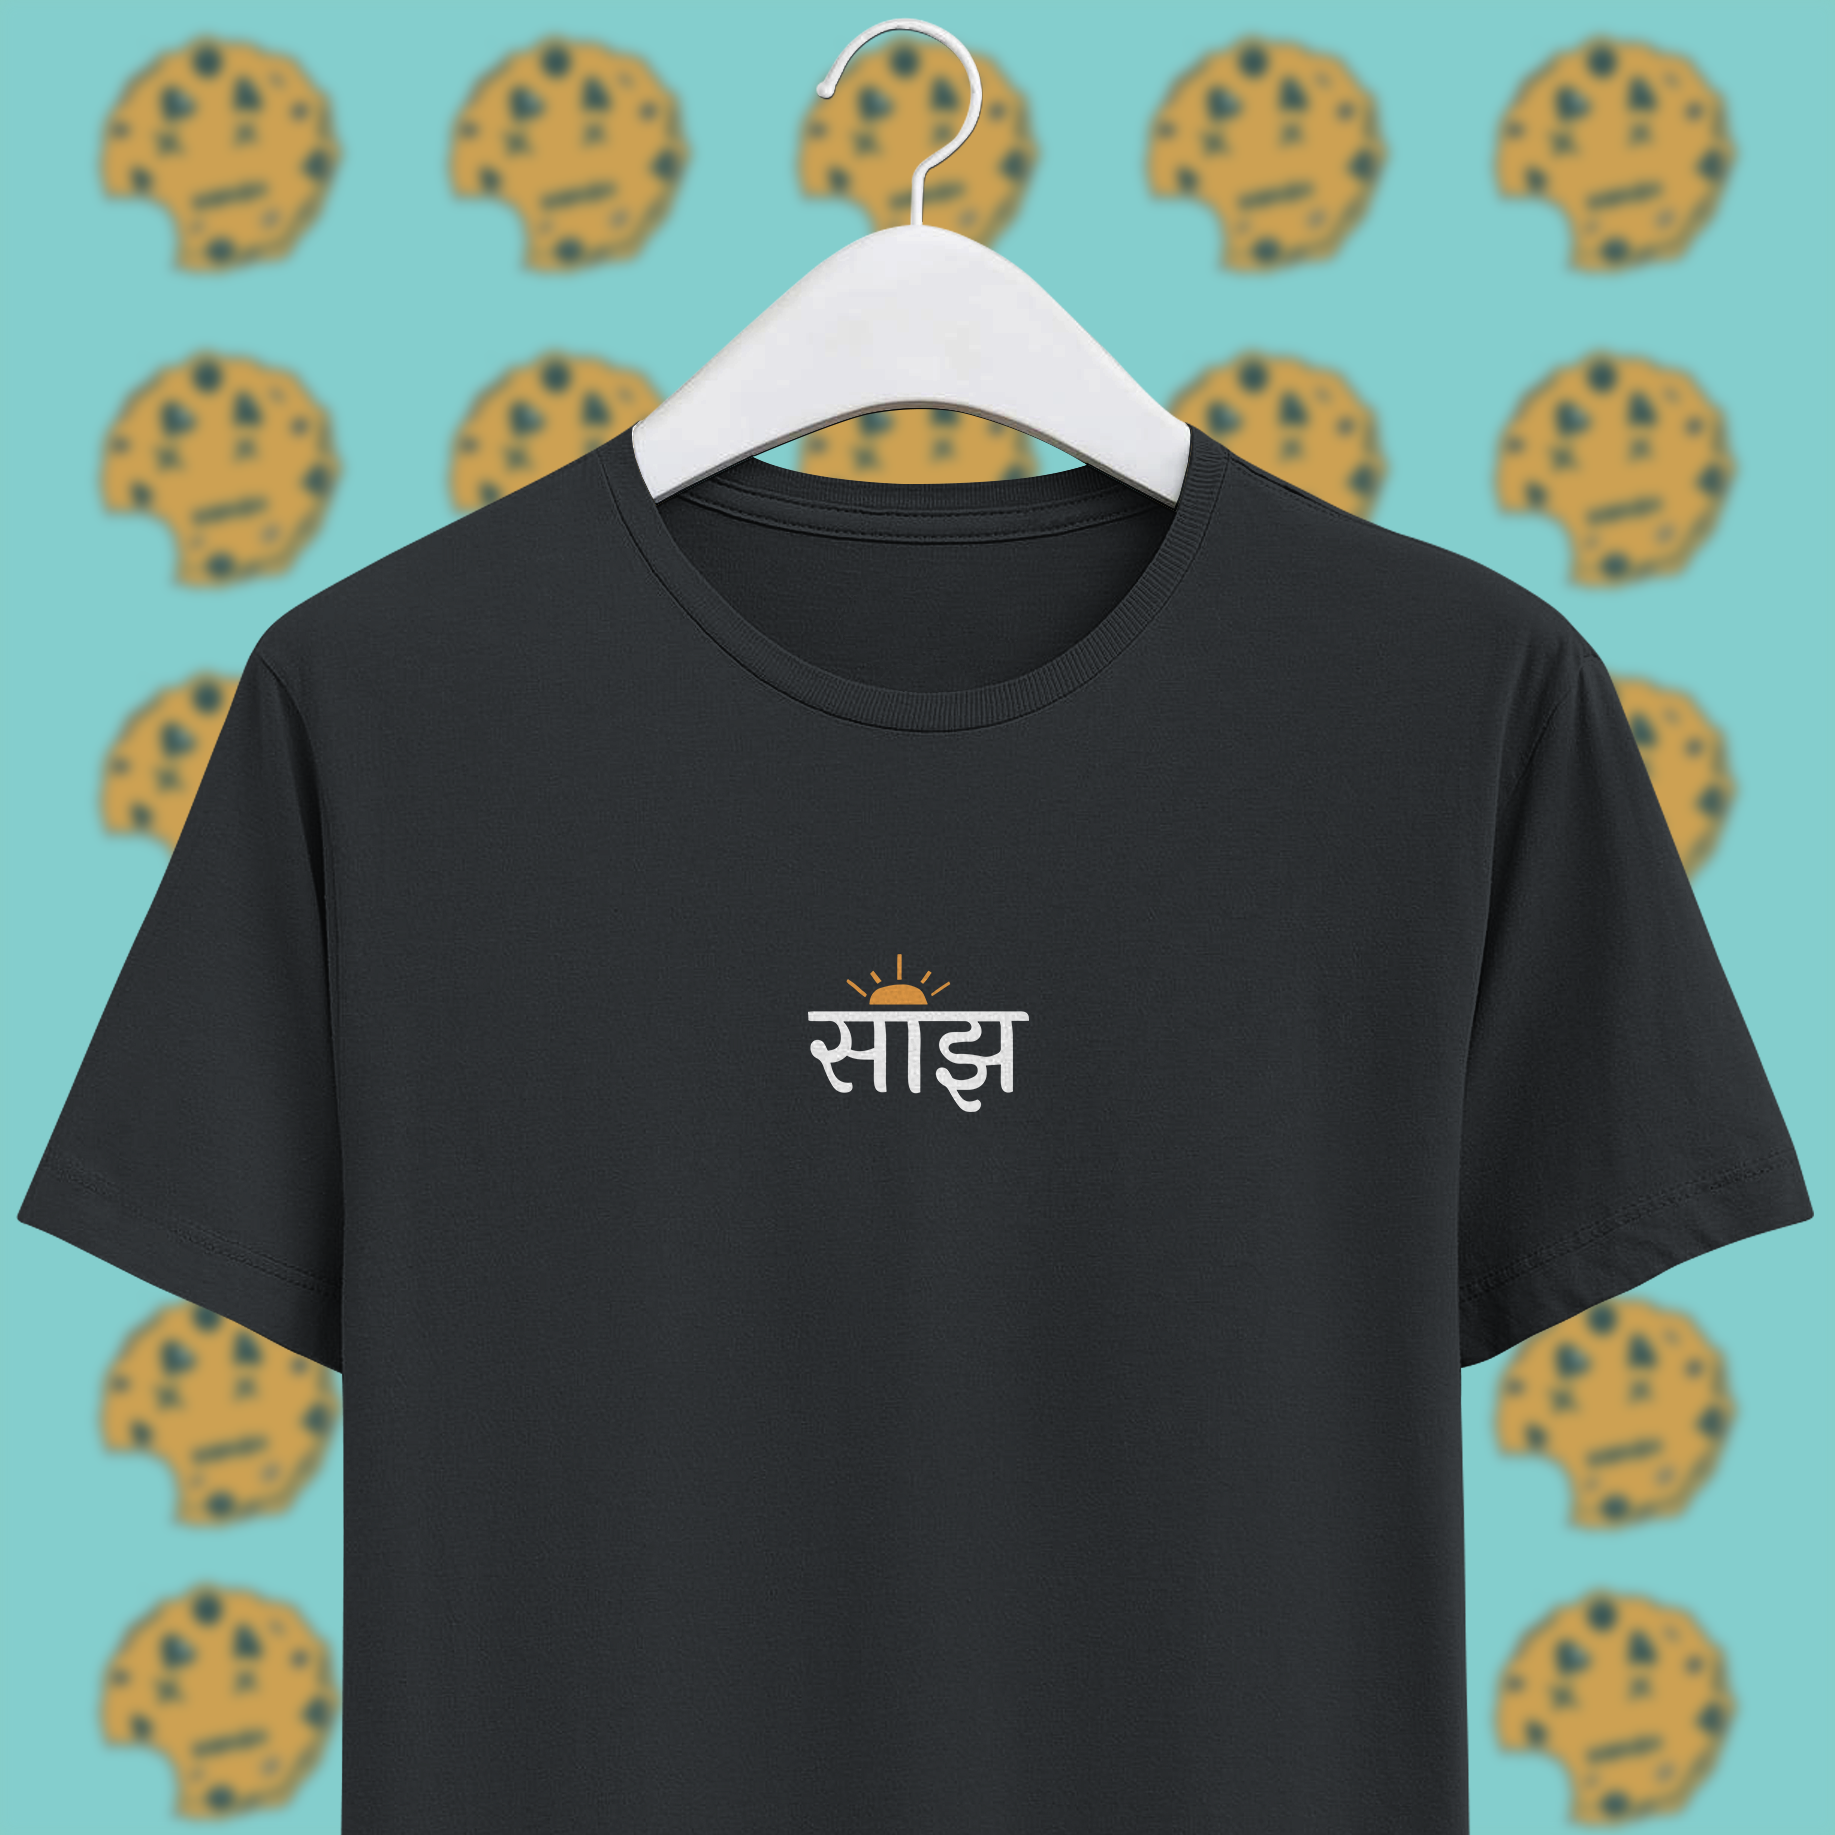 saanjh with setting sun hindi text on steel grey unisex t-shirt on hanger.